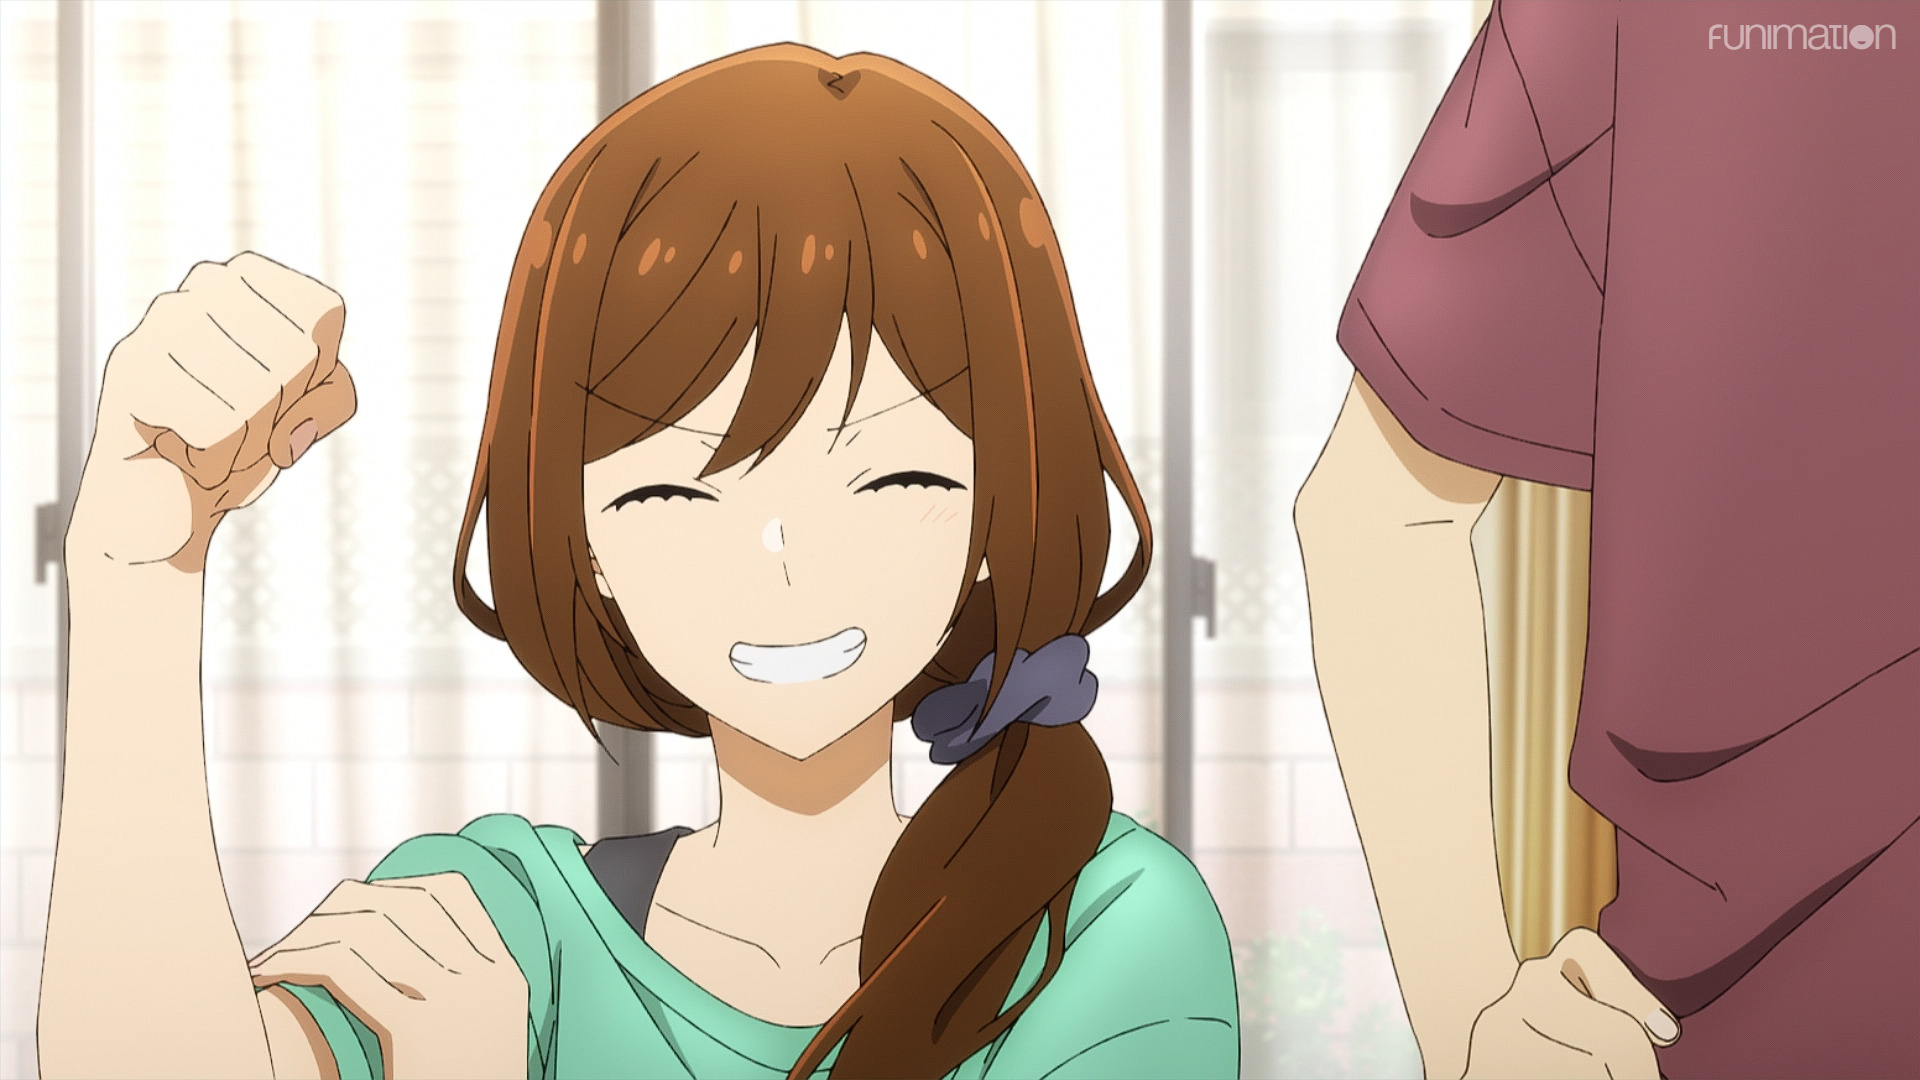 horimiya anime episode 1 screenshot